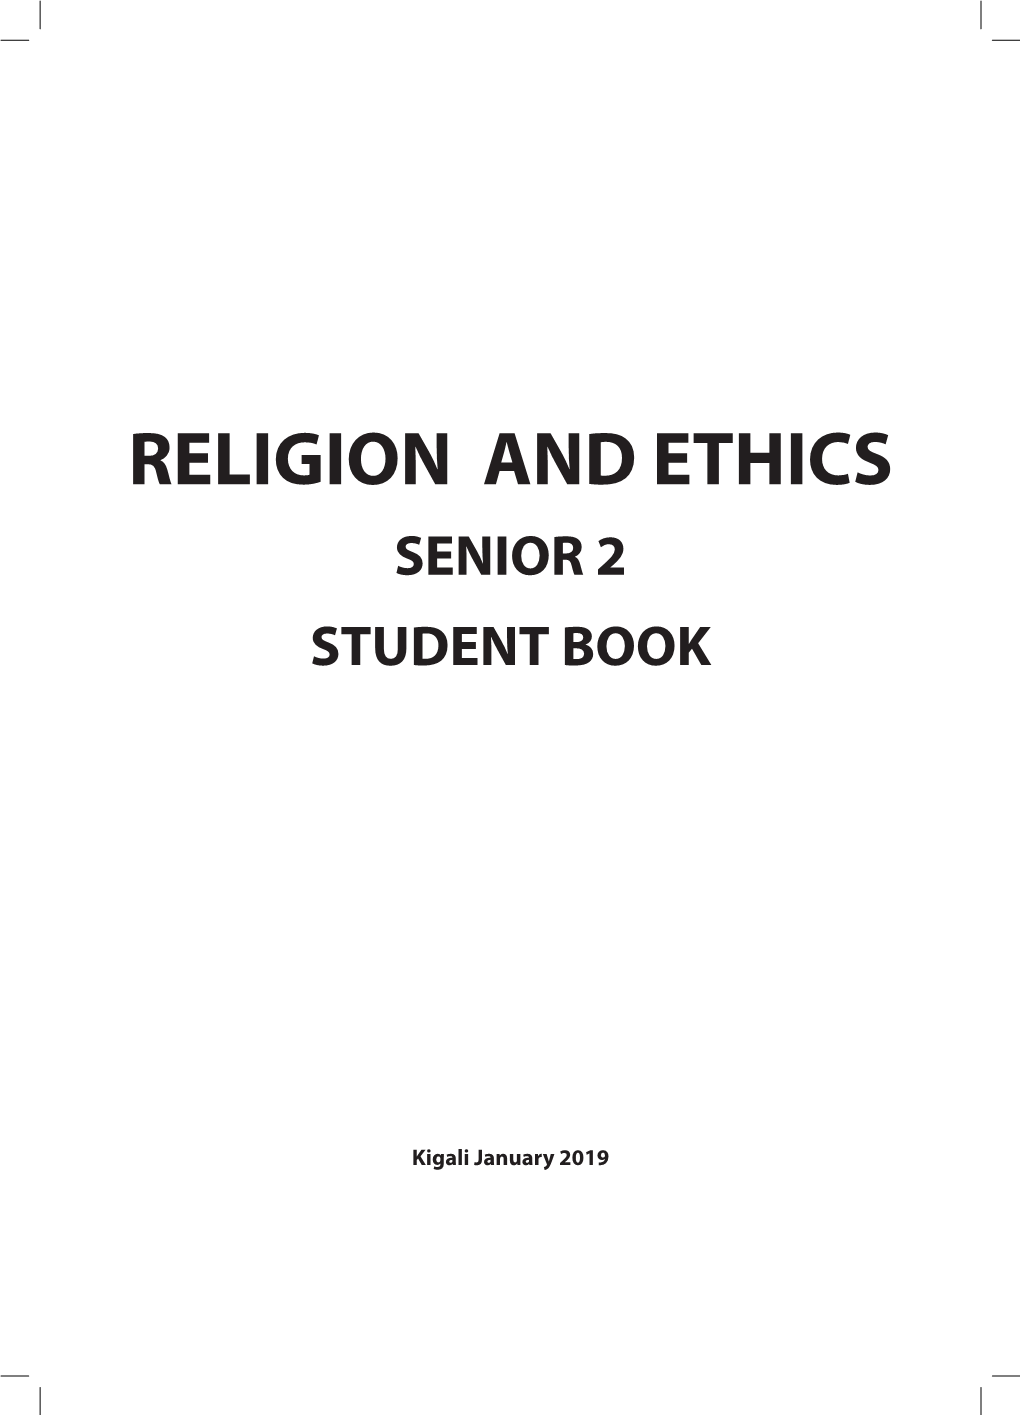 Religion and Ethics Senior 2 Student Book